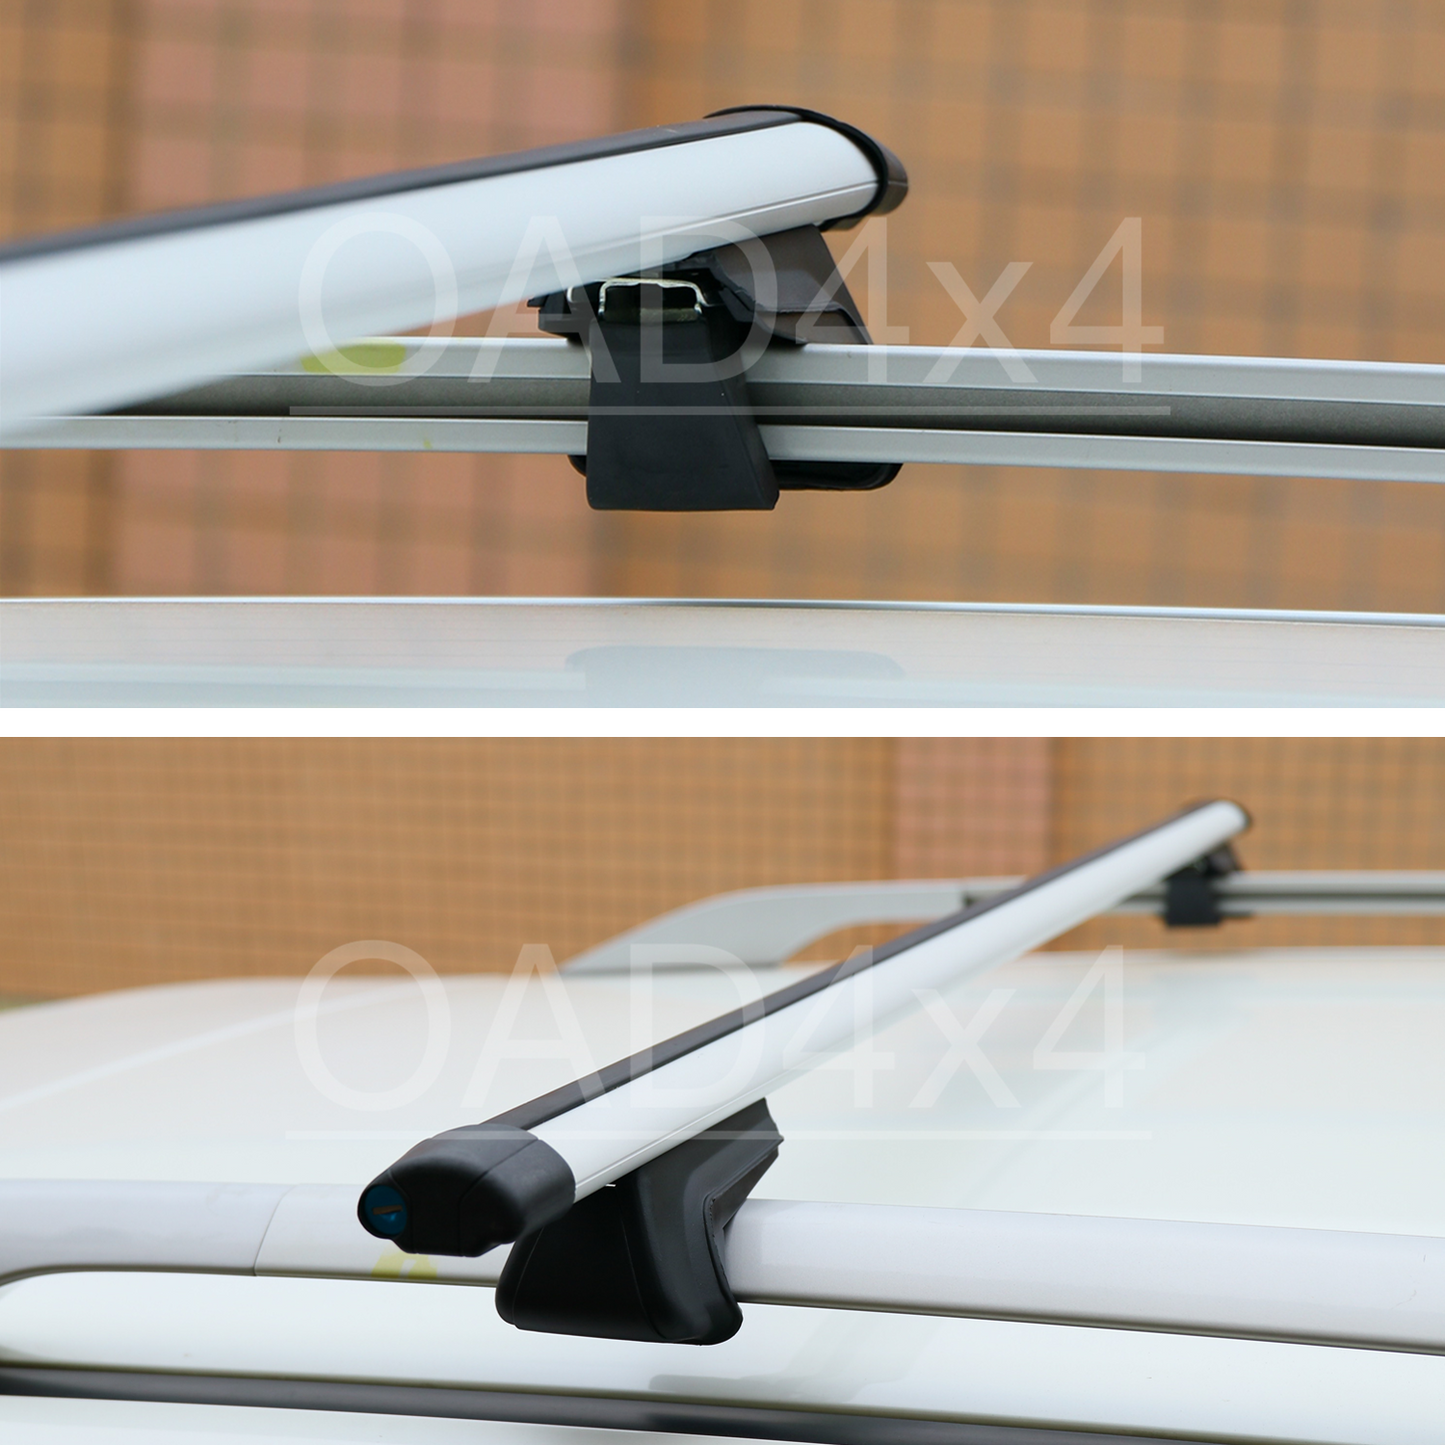 1 Pair Aluminum Silver Cross Bar Roof Racks Baggage holder for KIA Soul 09-13 with raised roof rail